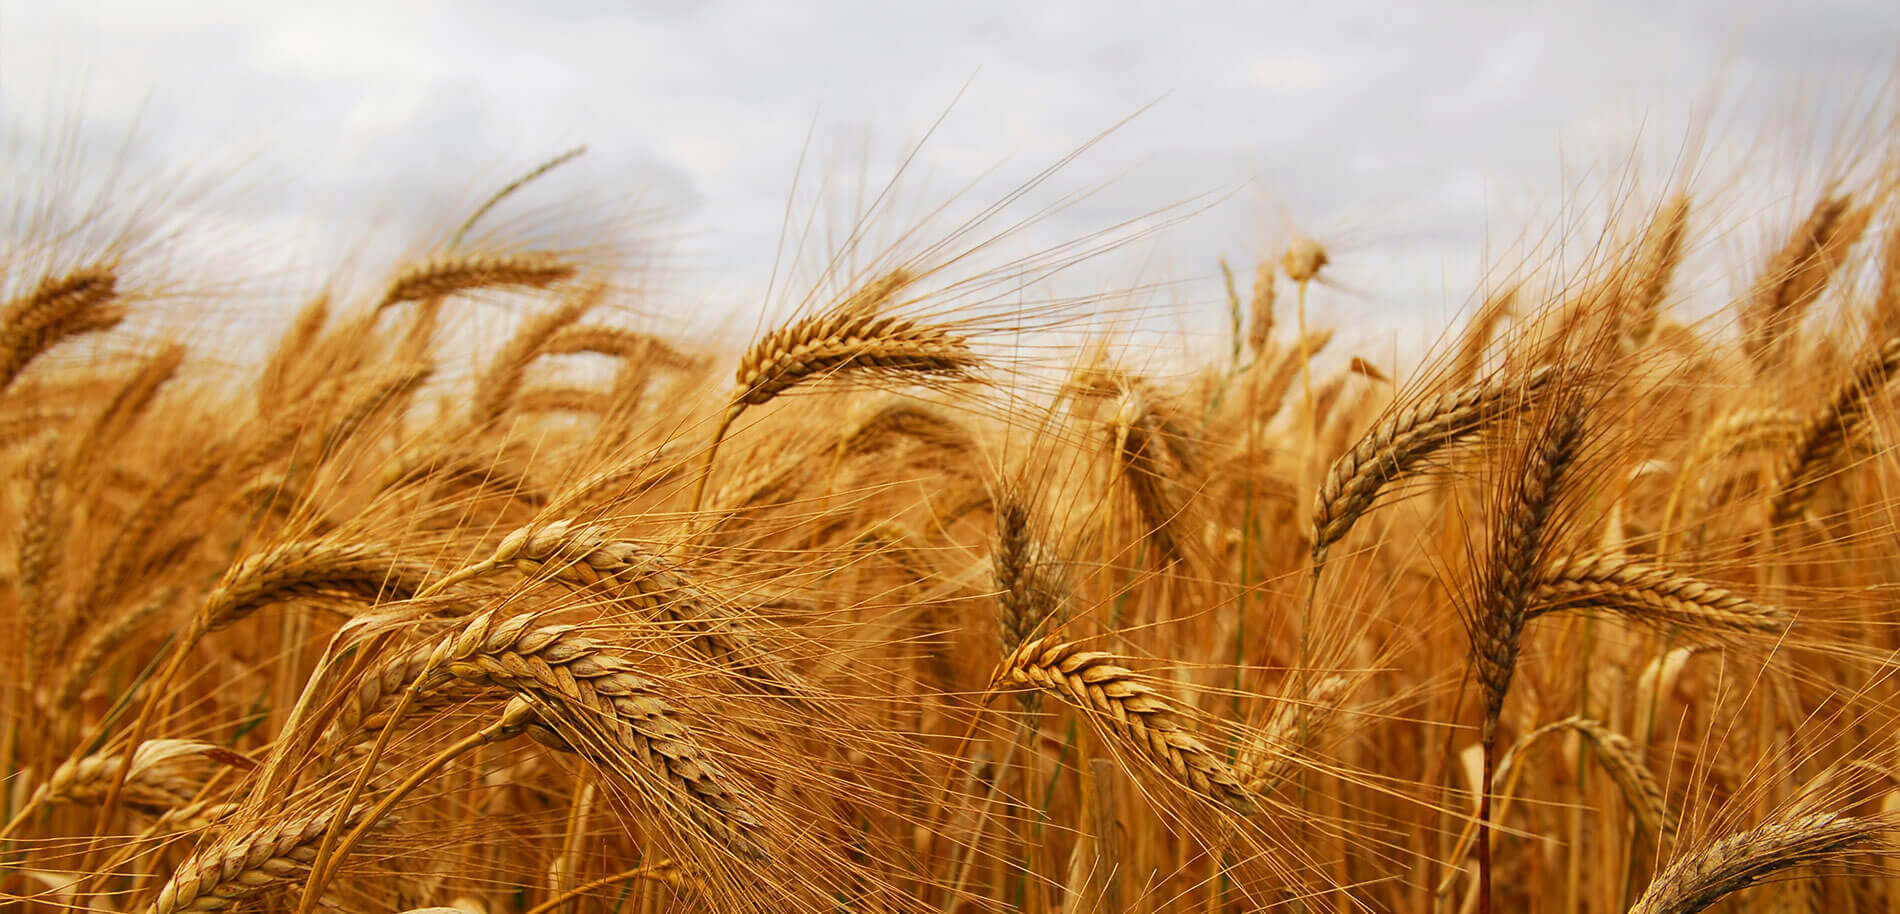 Up close shot of Wheat in a field.